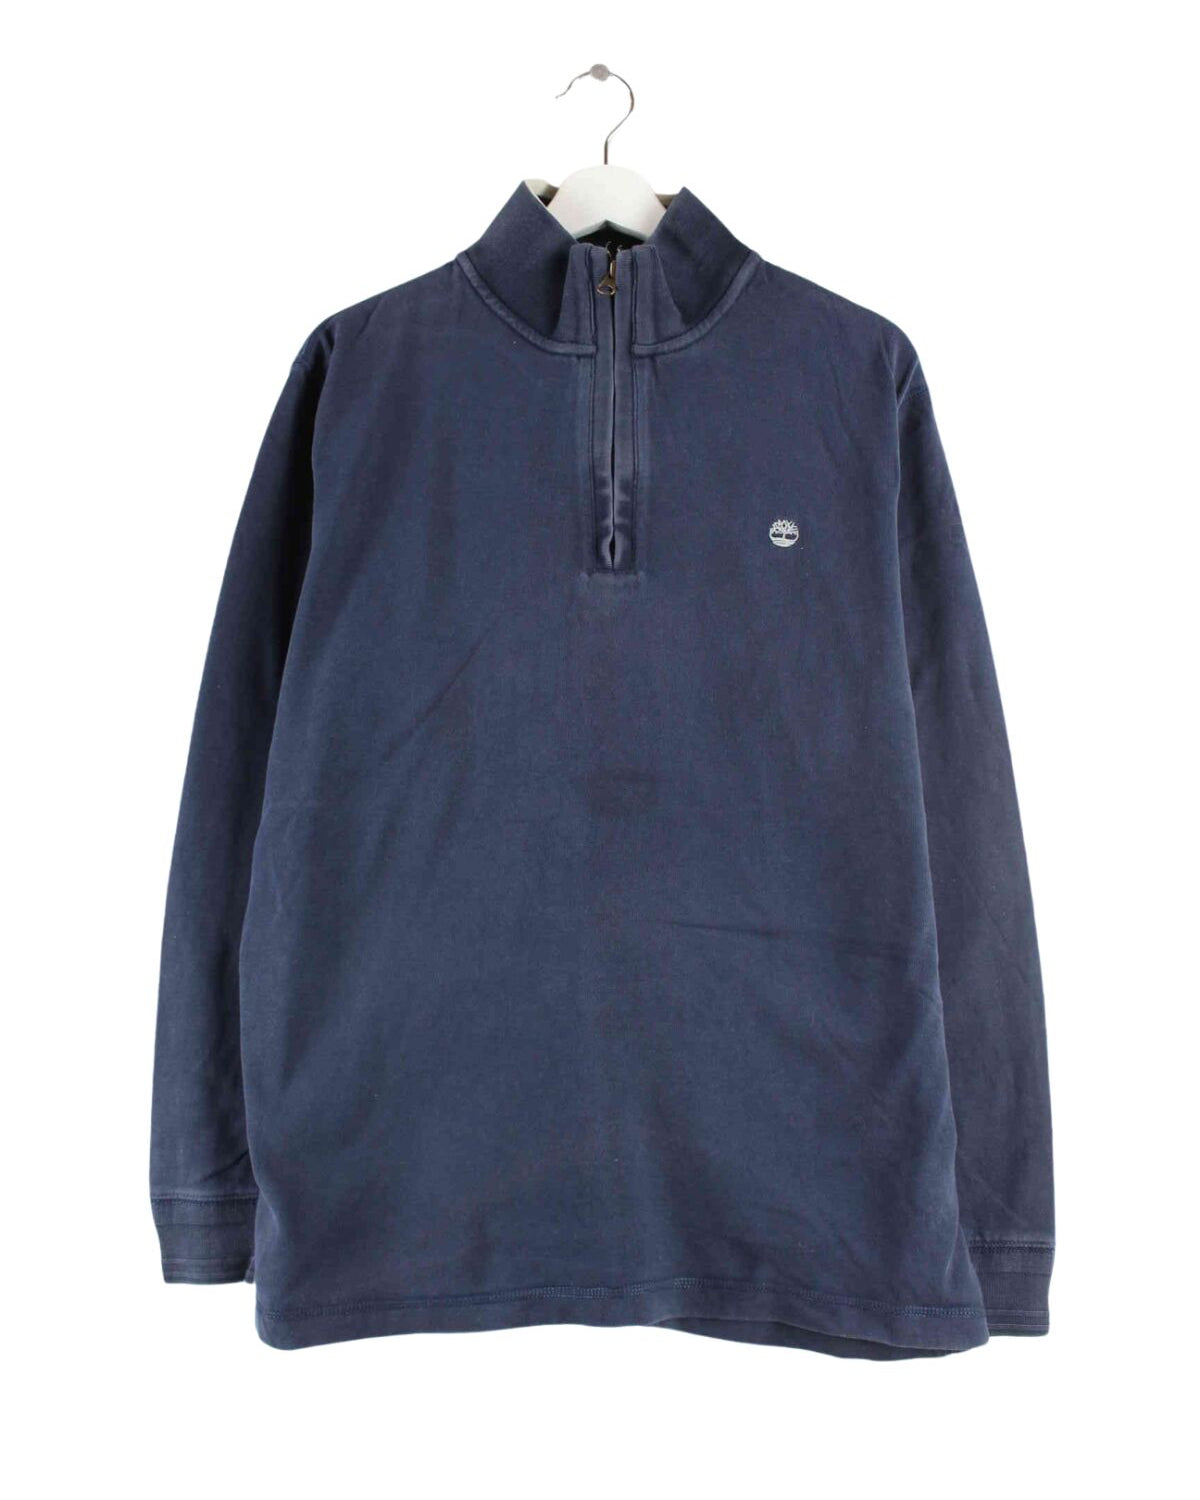 Timberland Basic Half Zip Sweater Blau L (front image)